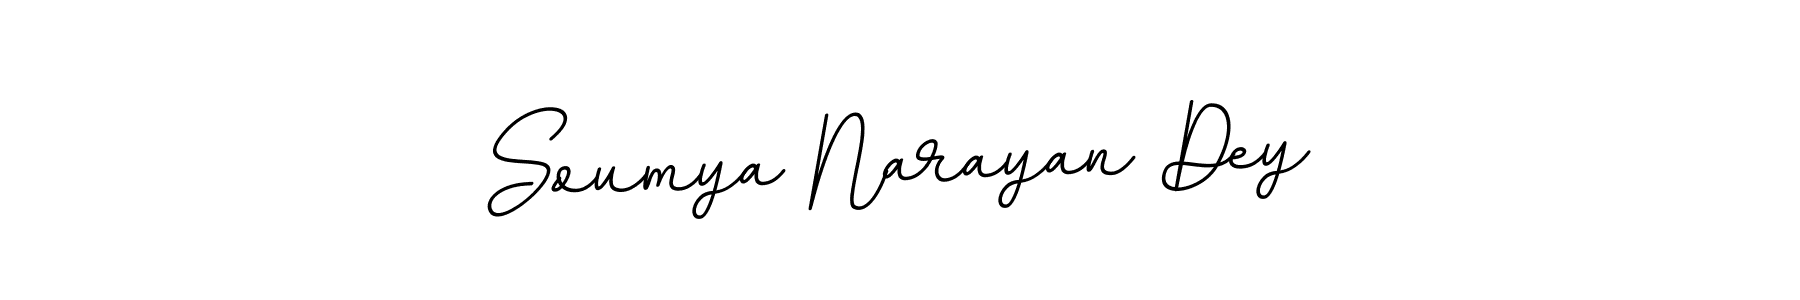 How to Draw Soumya Narayan Dey signature style? BallpointsItalic-DORy9 is a latest design signature styles for name Soumya Narayan Dey. Soumya Narayan Dey signature style 11 images and pictures png